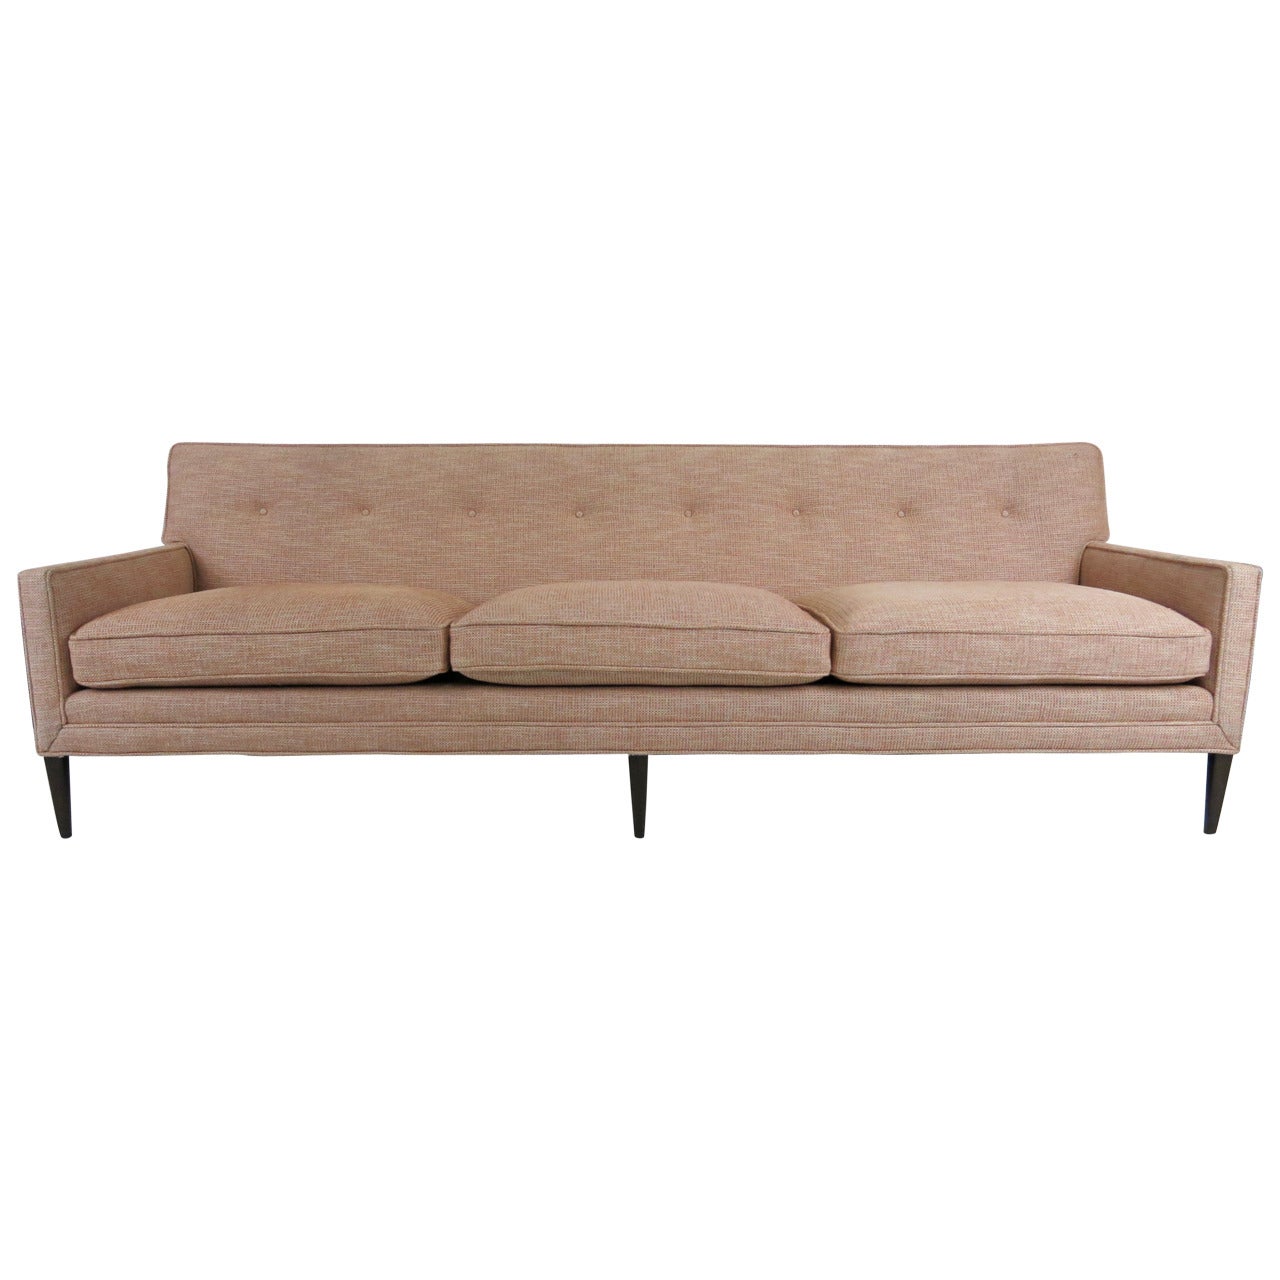 Exquisite Walnut Framed Modern Sofa